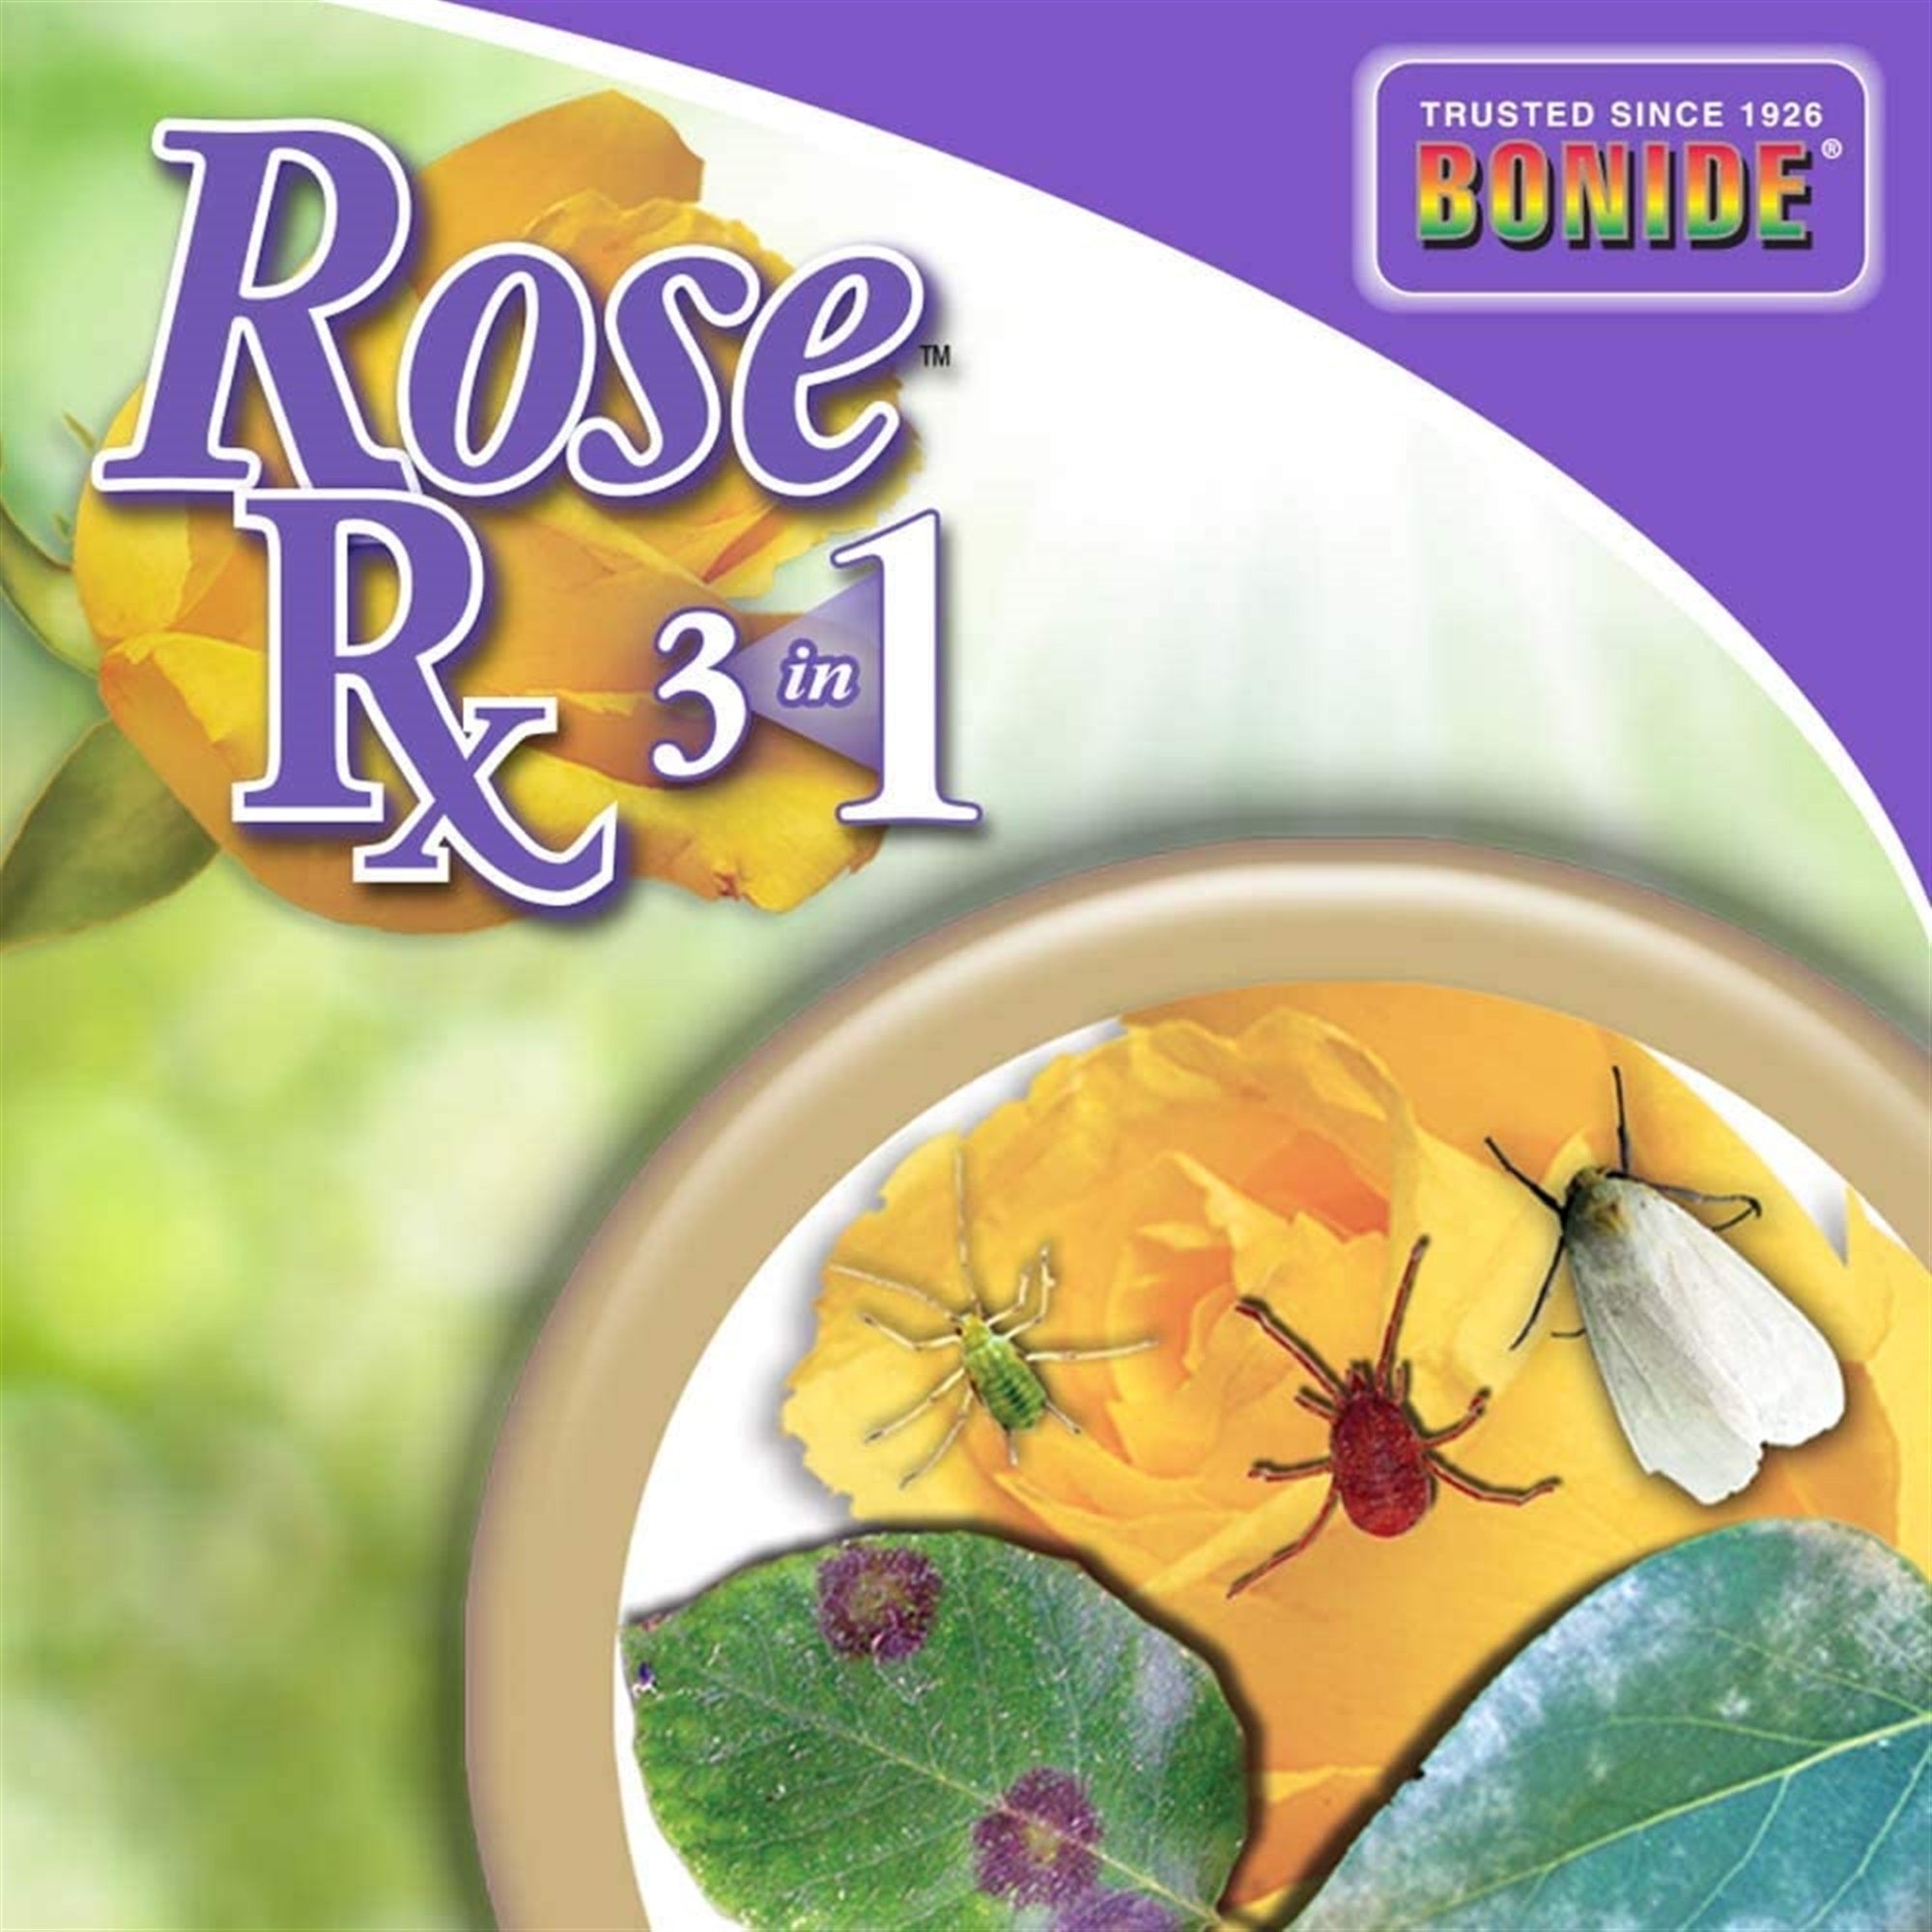 Bonide Rose Rx 3-in1, RTU Multi-purpose Insecticide and Fungicide 32oz